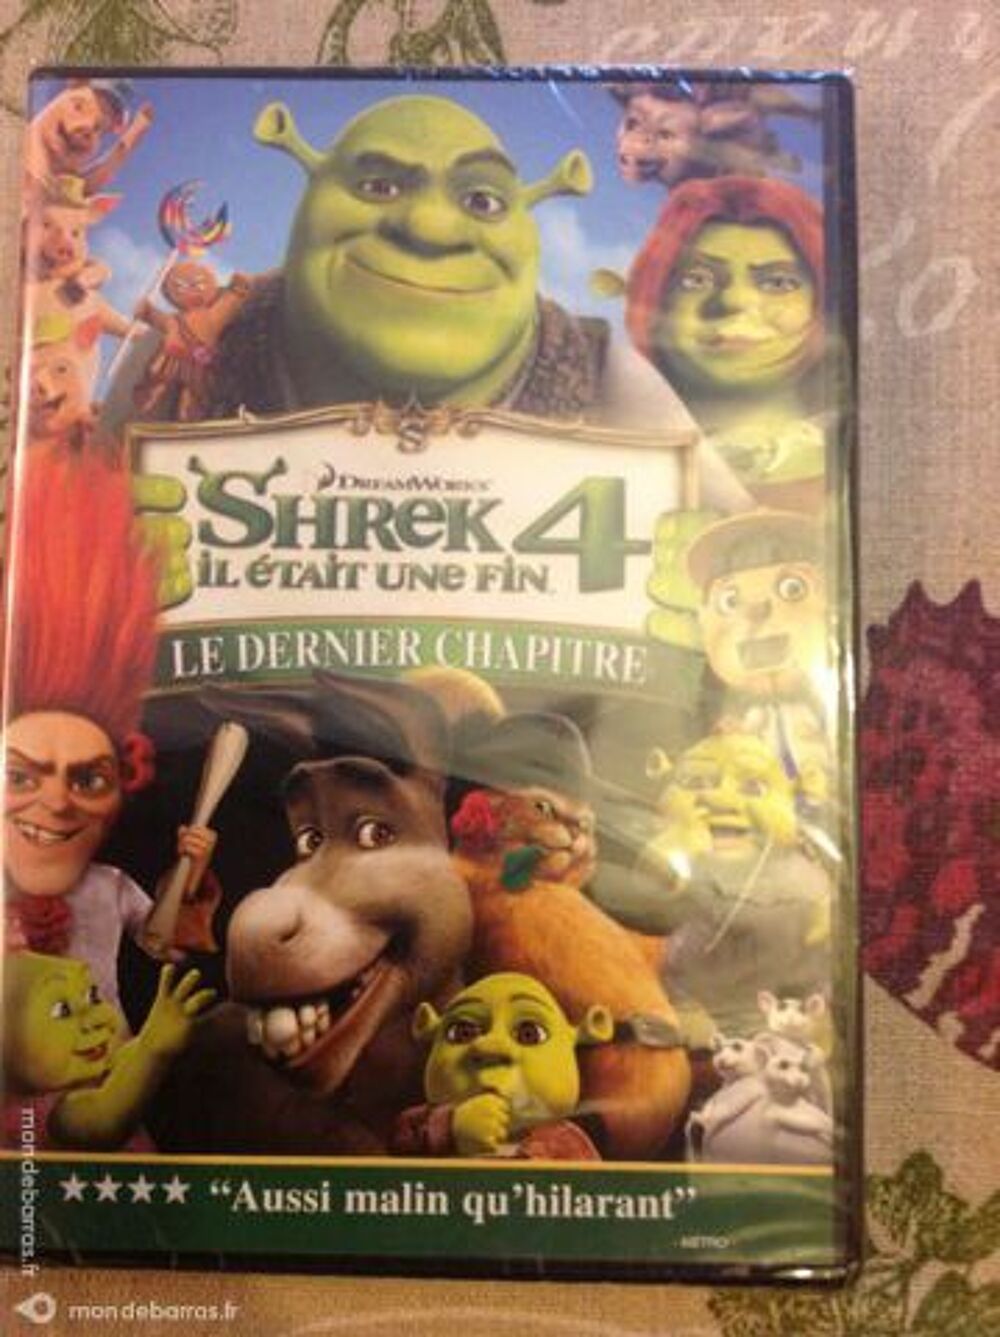 Shrek 4 il &eacute;tait une fin neuf sous blister DVD et blu-ray